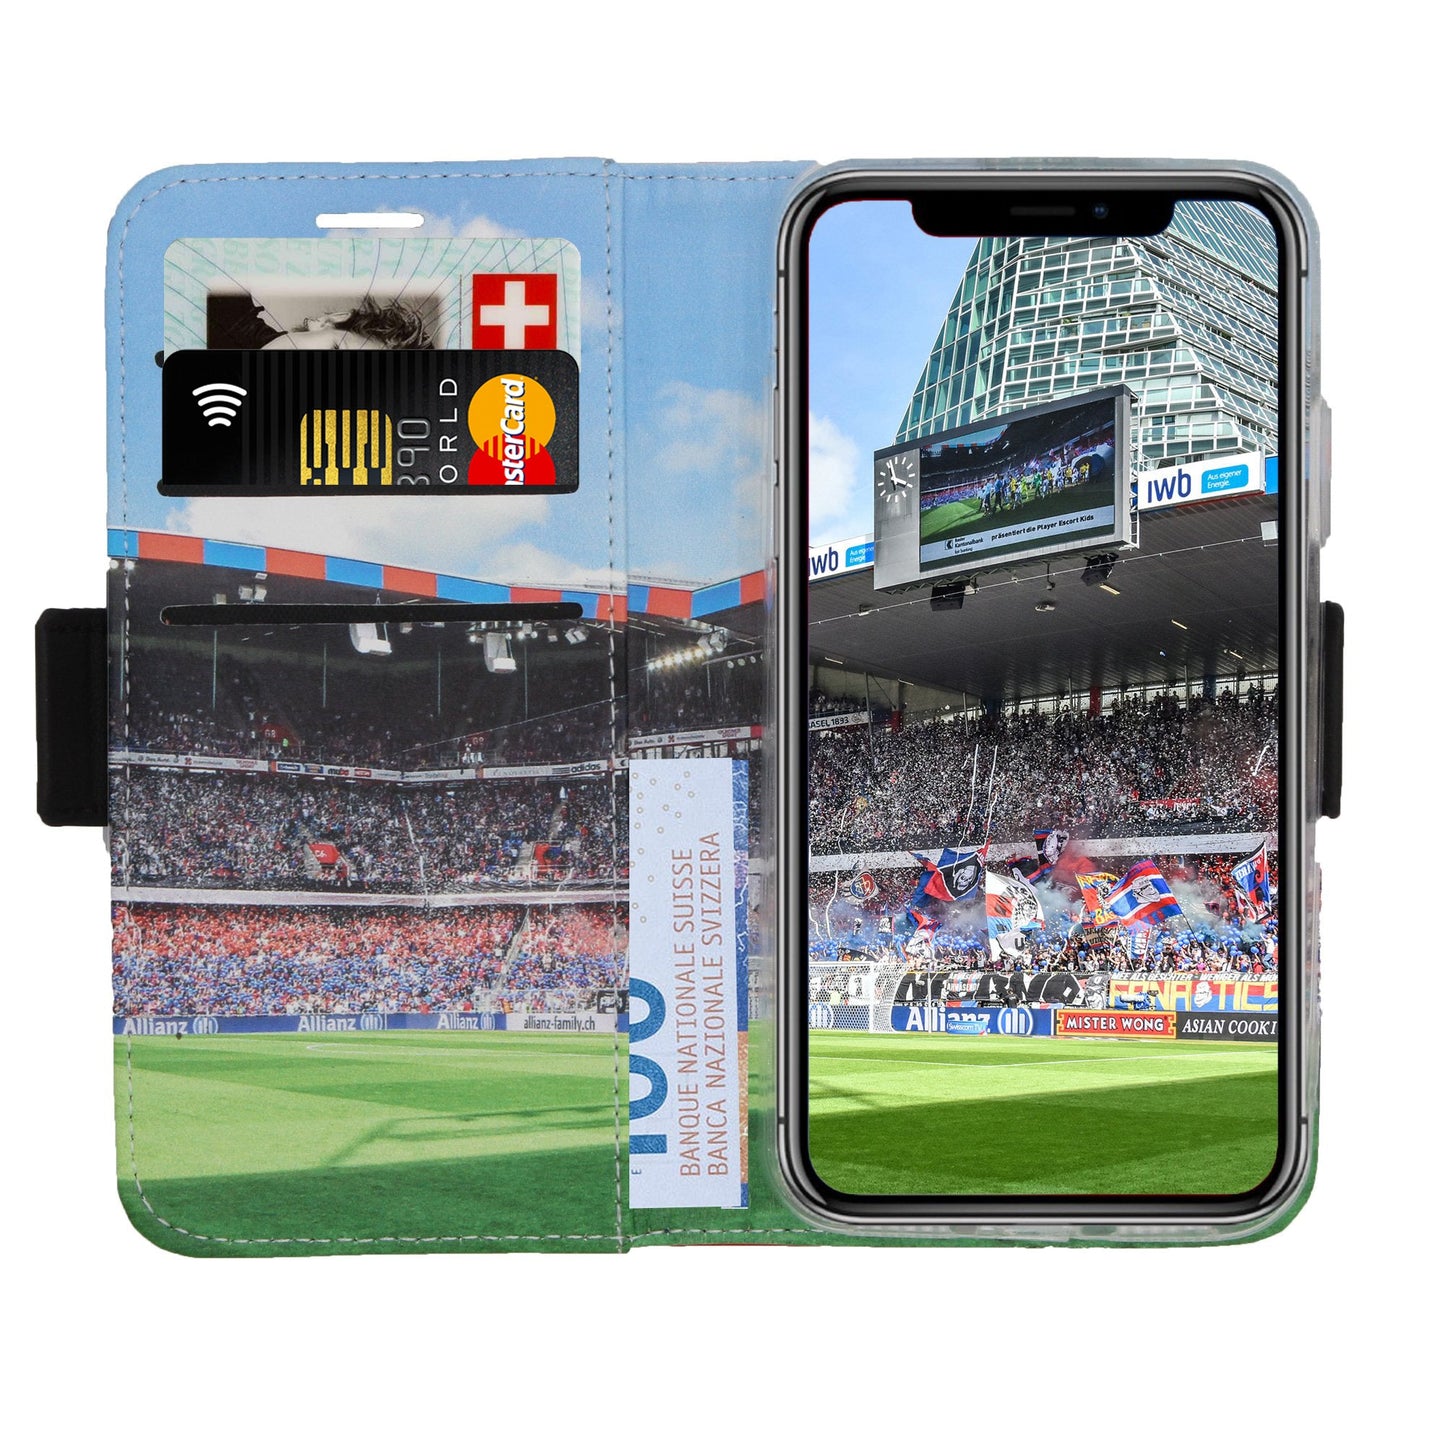 FCB rot / blau Victor Case für iPhone 11 Pro Max